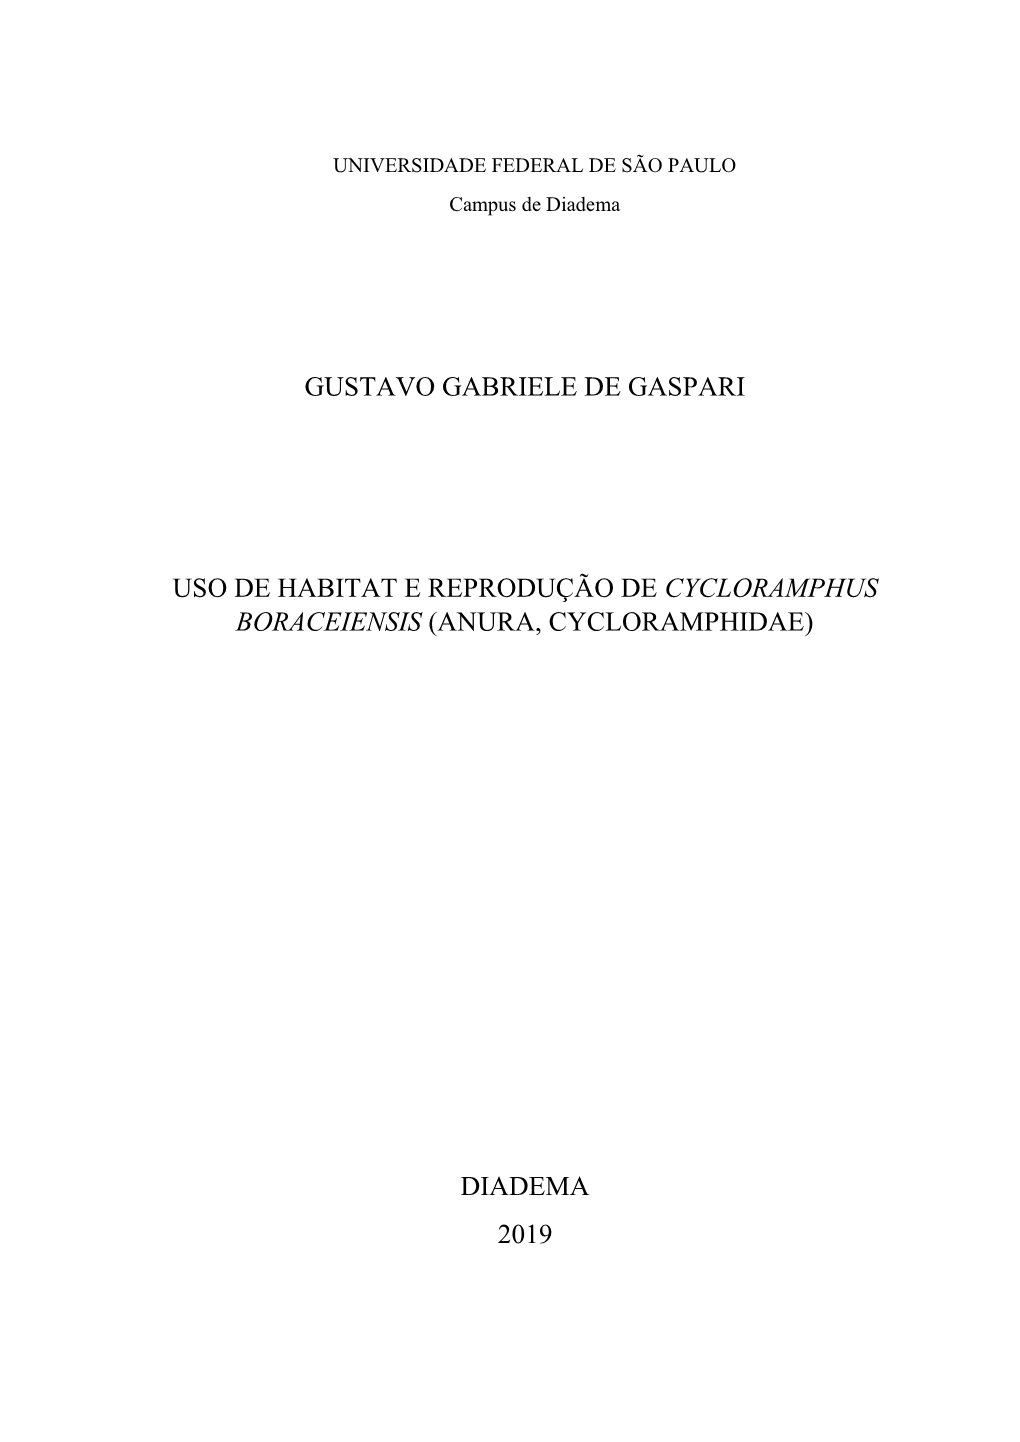 (Anura, Cycloramphidae) Diadema 2019 Gustavo Gabriele De Gaspari